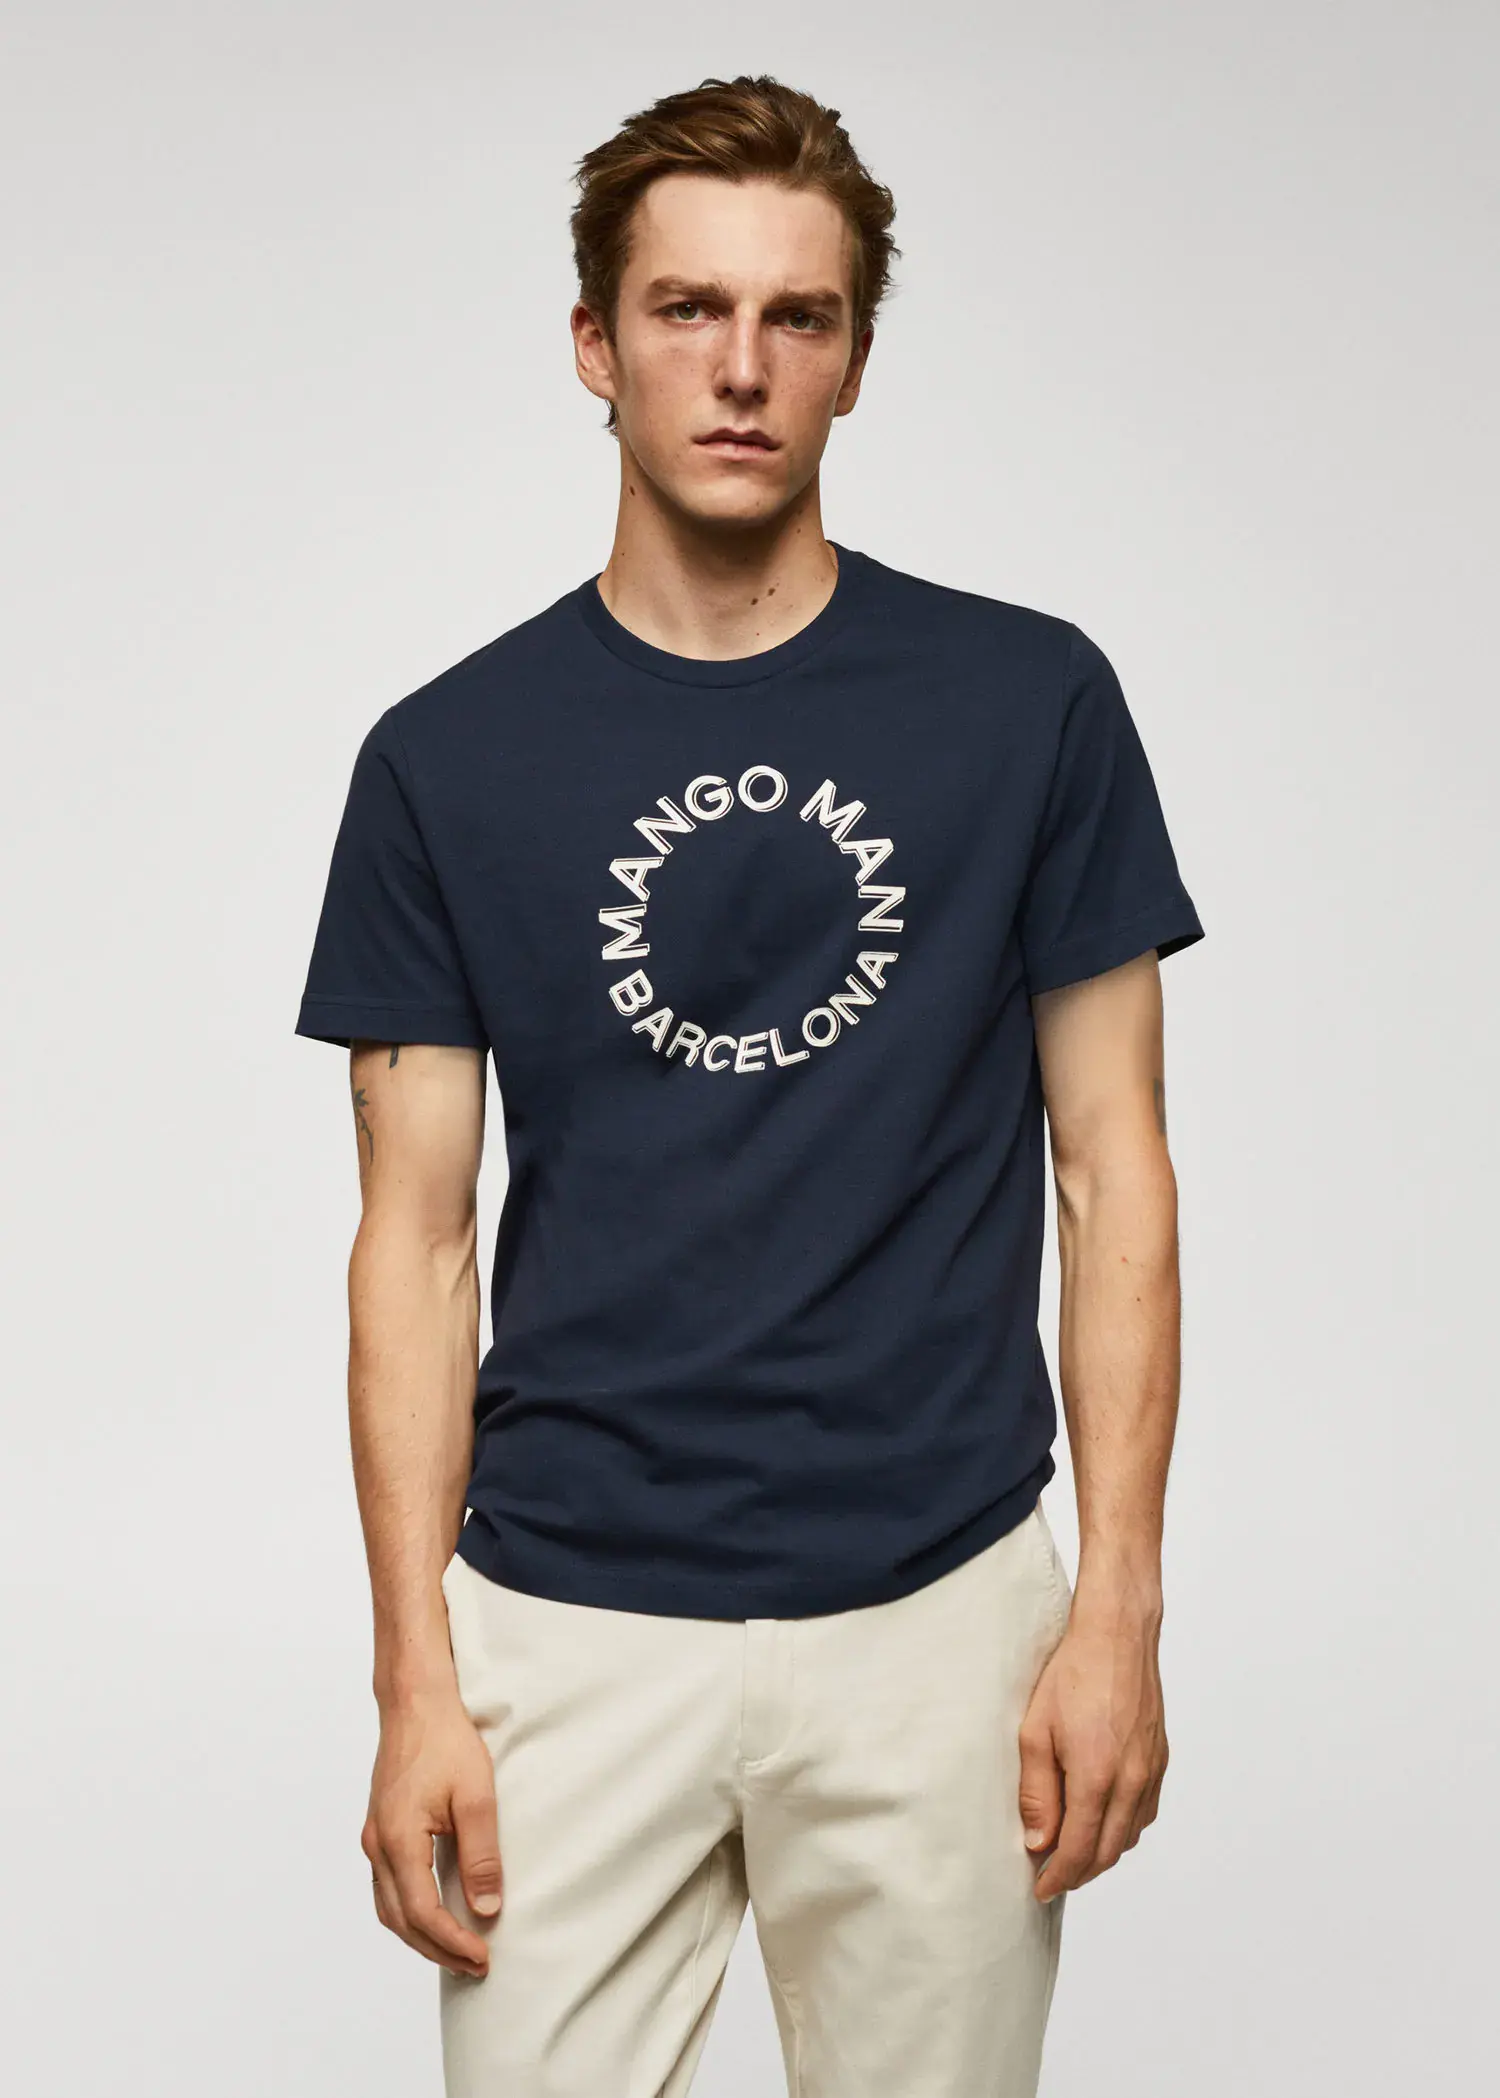 Mango 100% cotton t-shirt with logo. a man wearing a t-shirt that says " mango man barcelona ". 